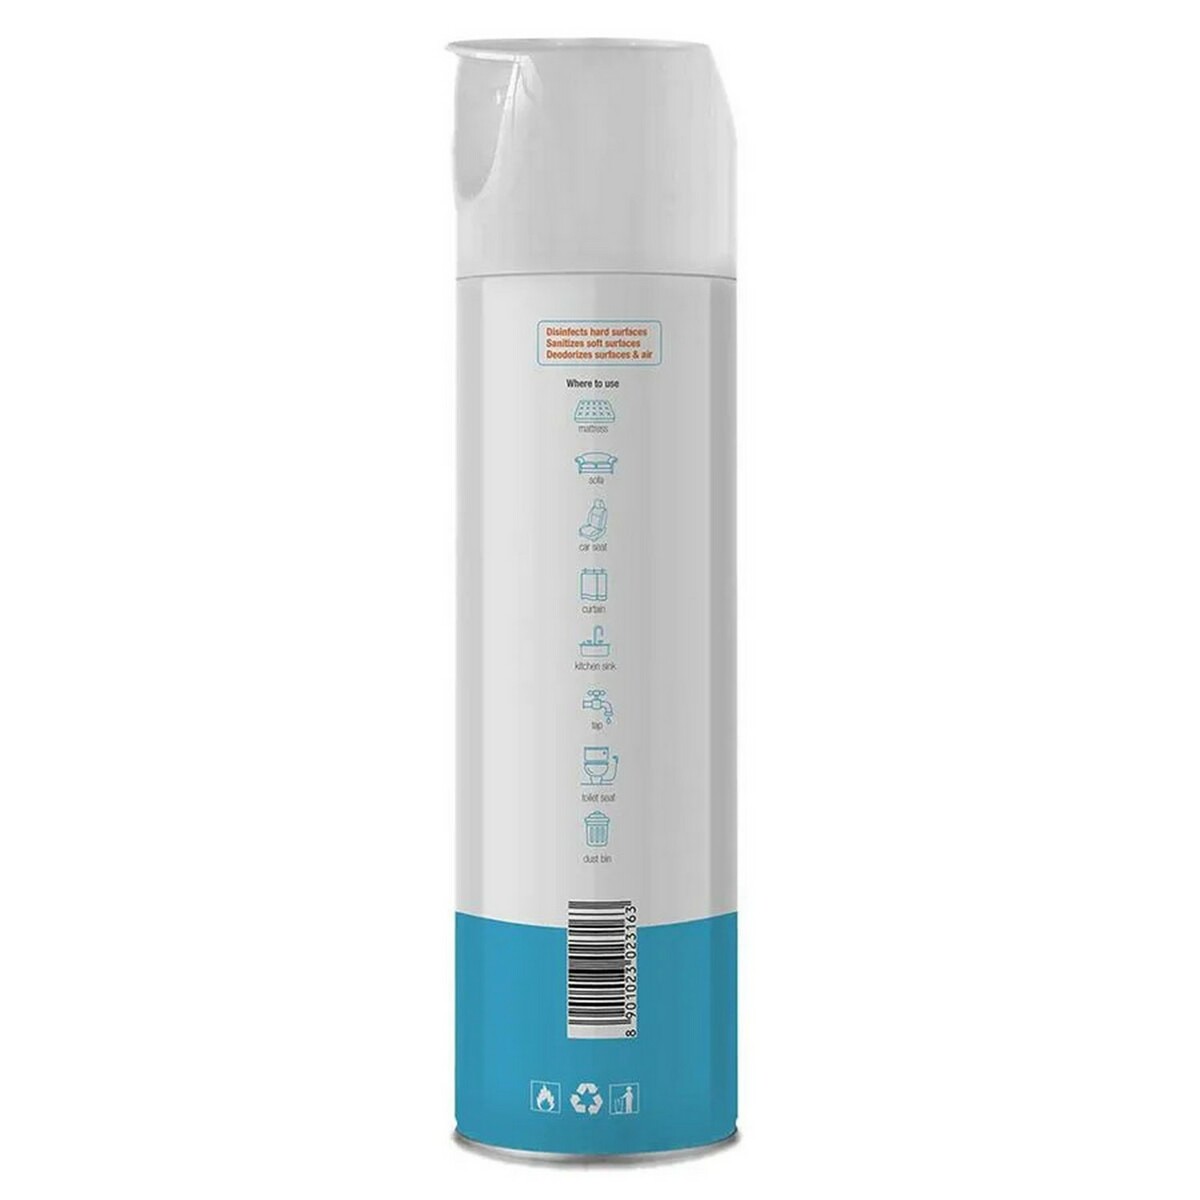 Godrej Protekt Aqua Air & Surface Disinfectant Spray 240 ml